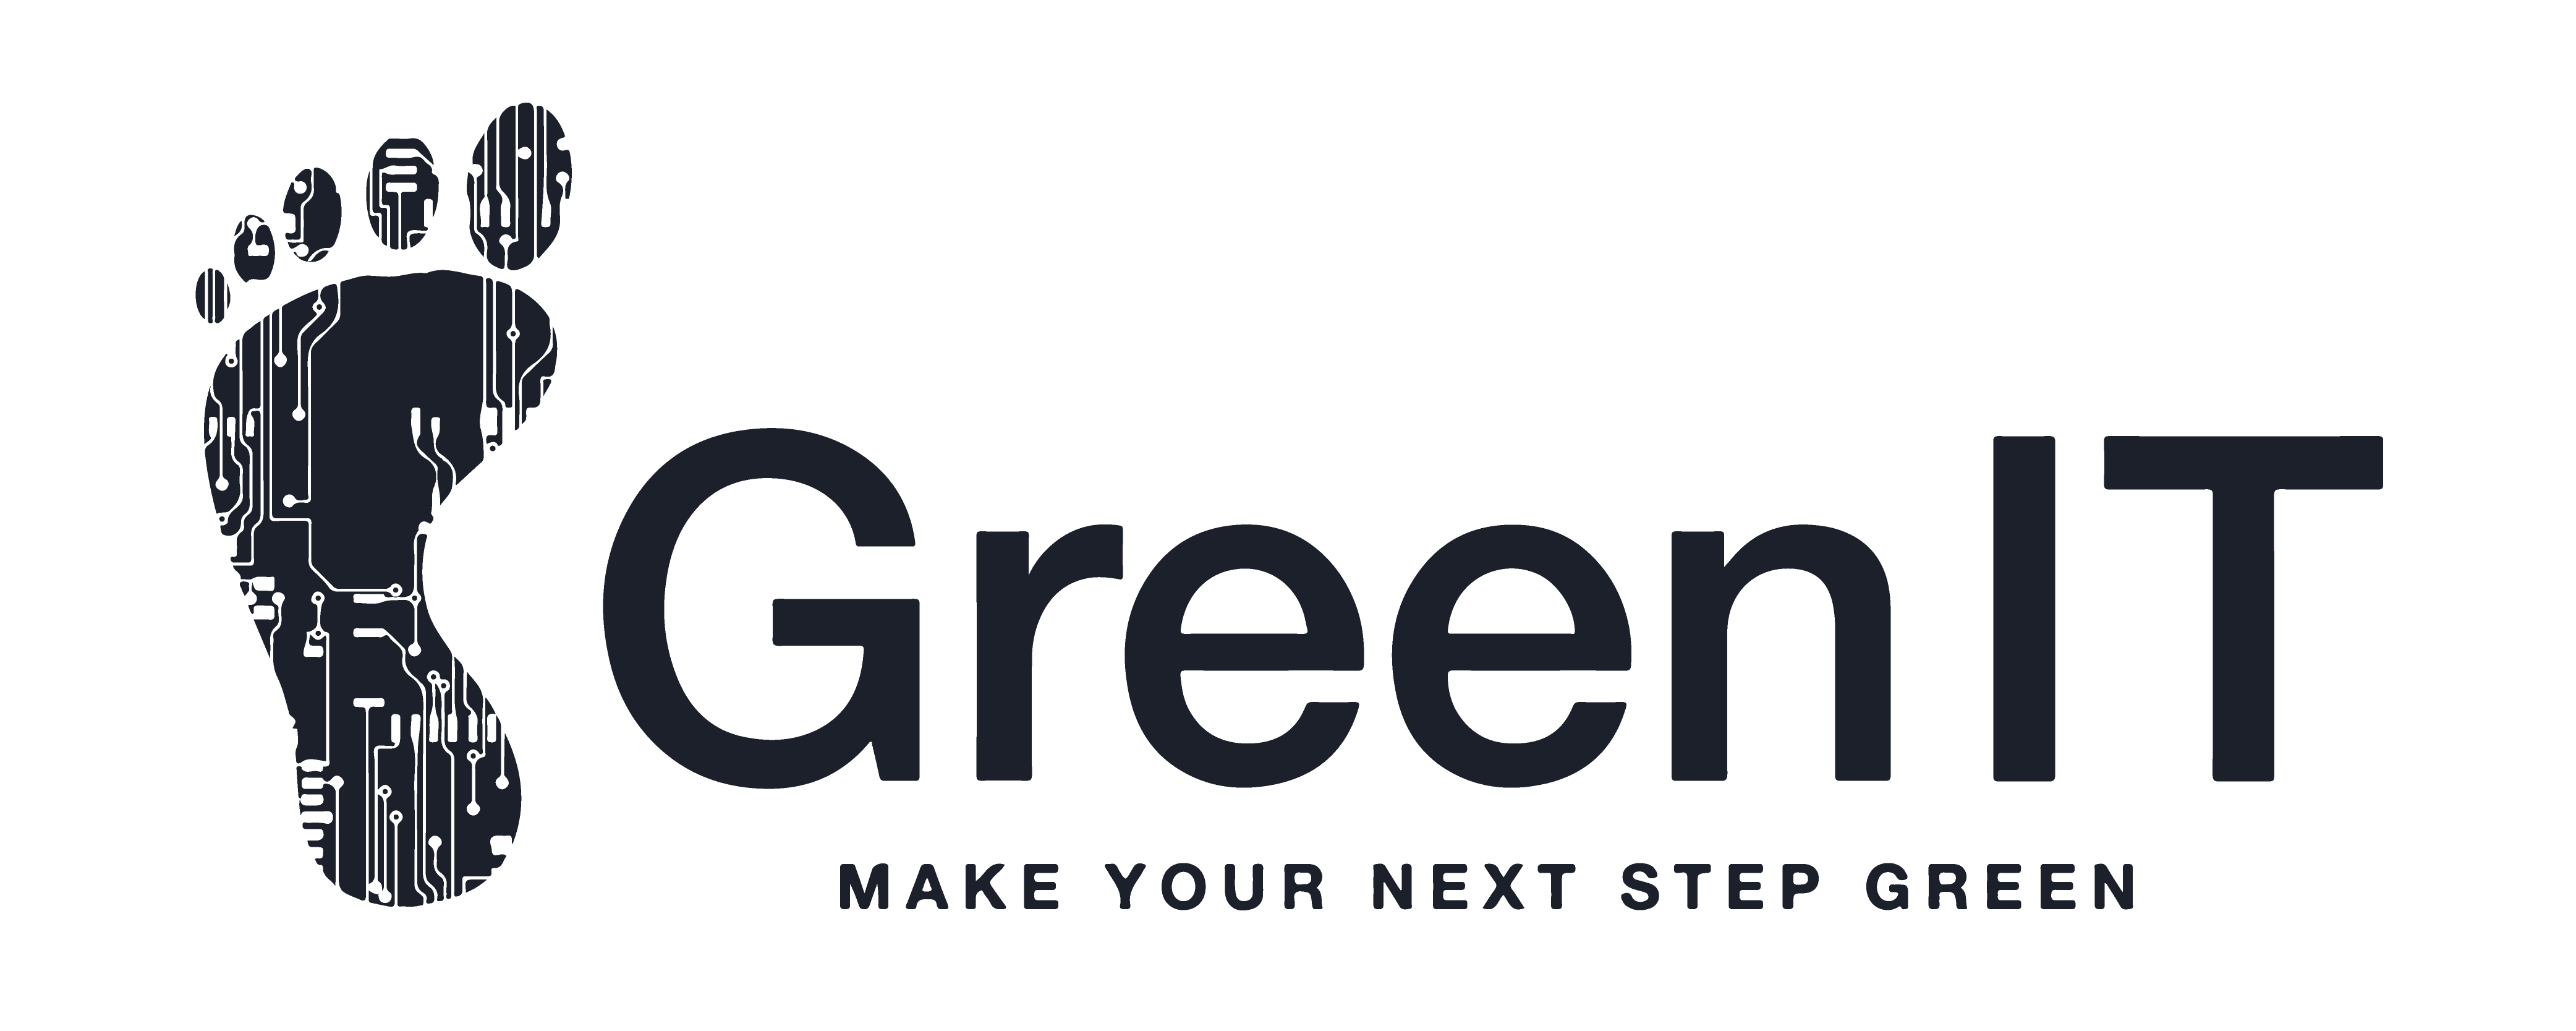 green it logo